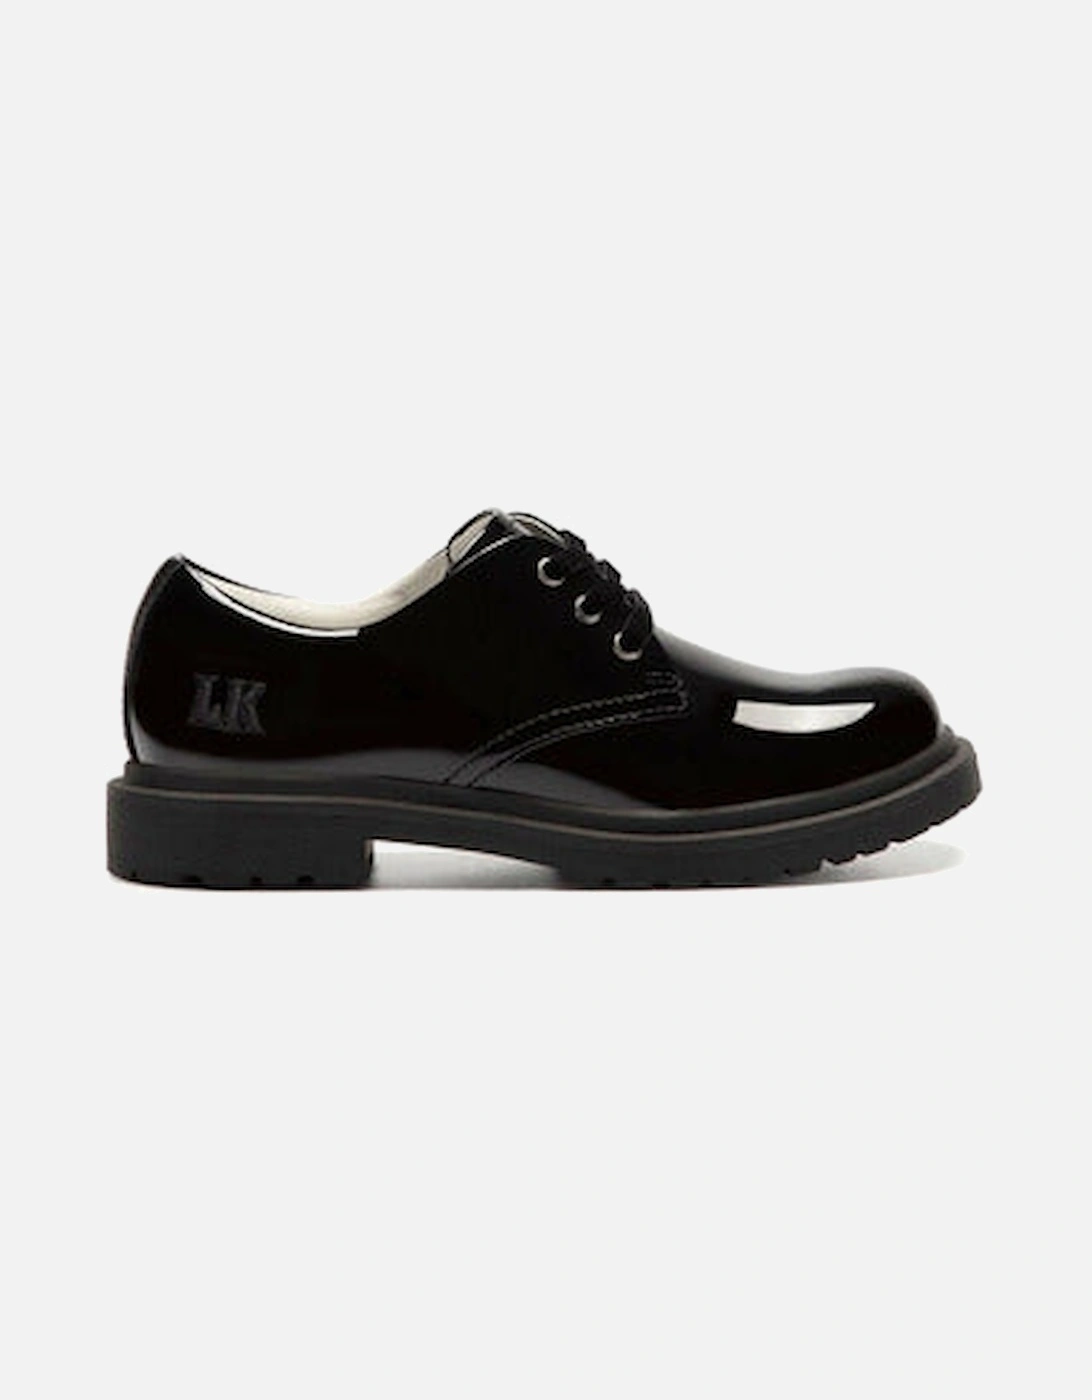 Lelly Kelly School Shoes Elaine 8654 black patent